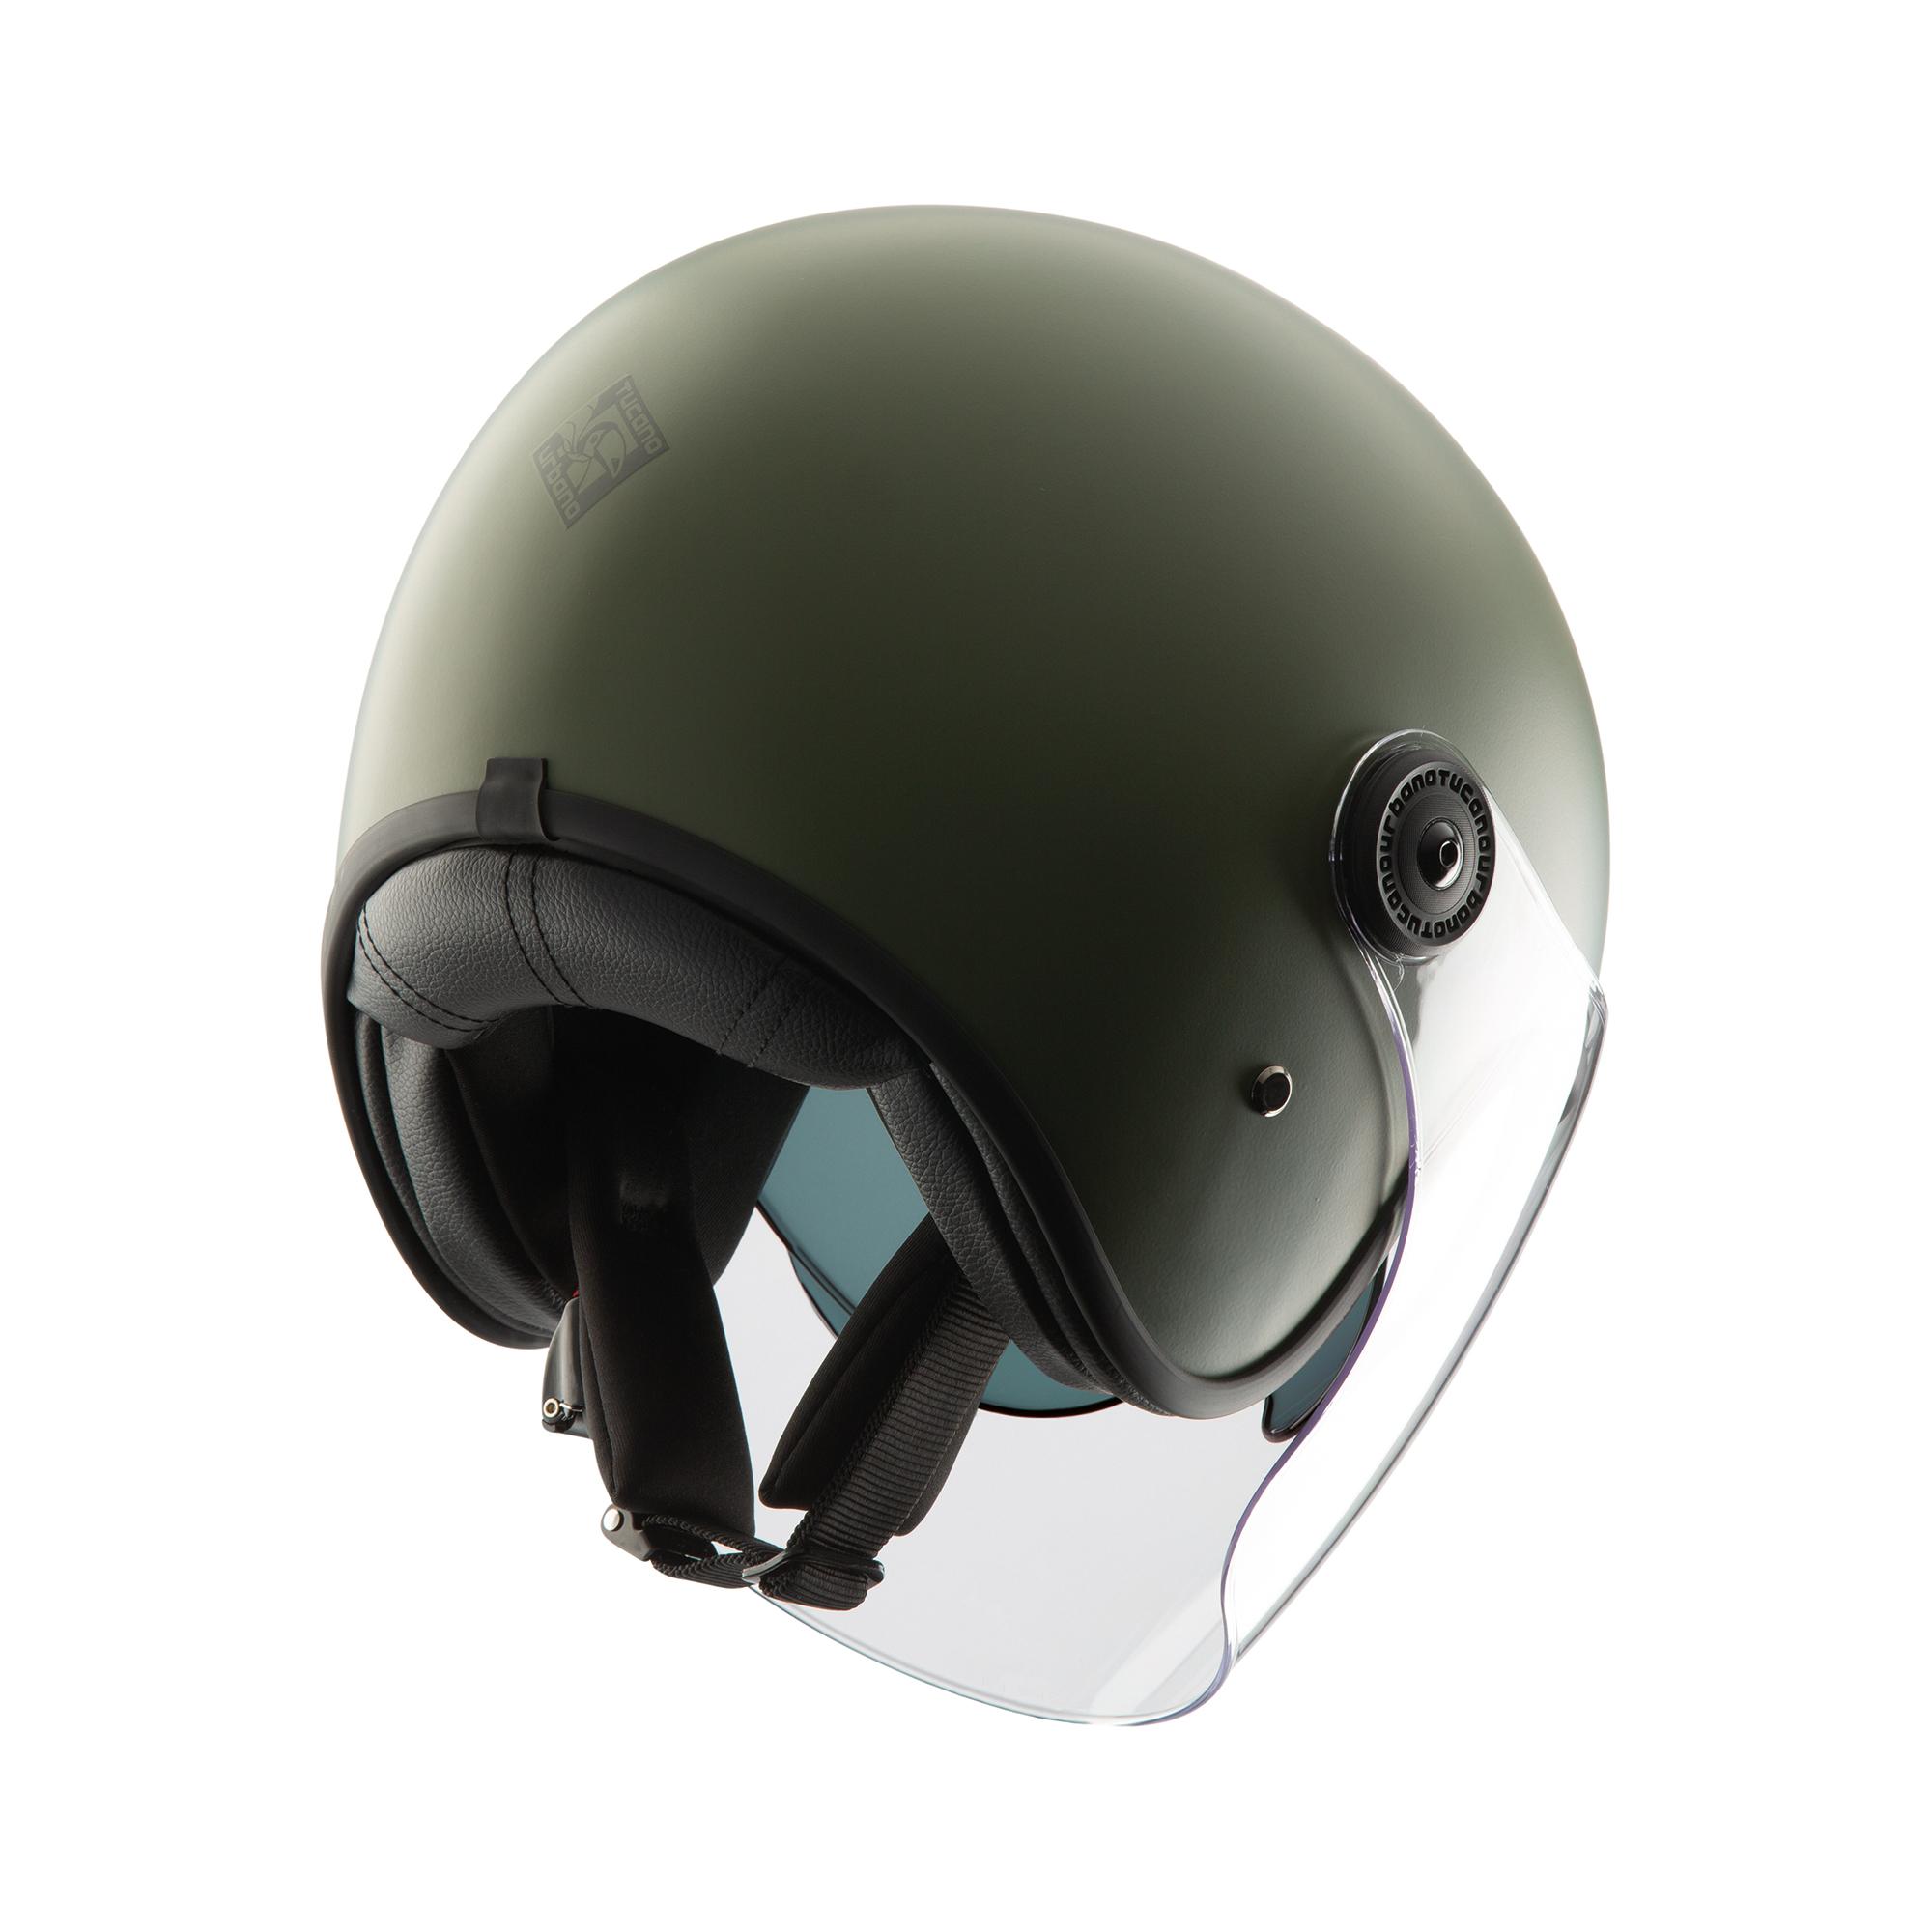 El'fast Helmet Matte Airborne Green Tucano Urbano